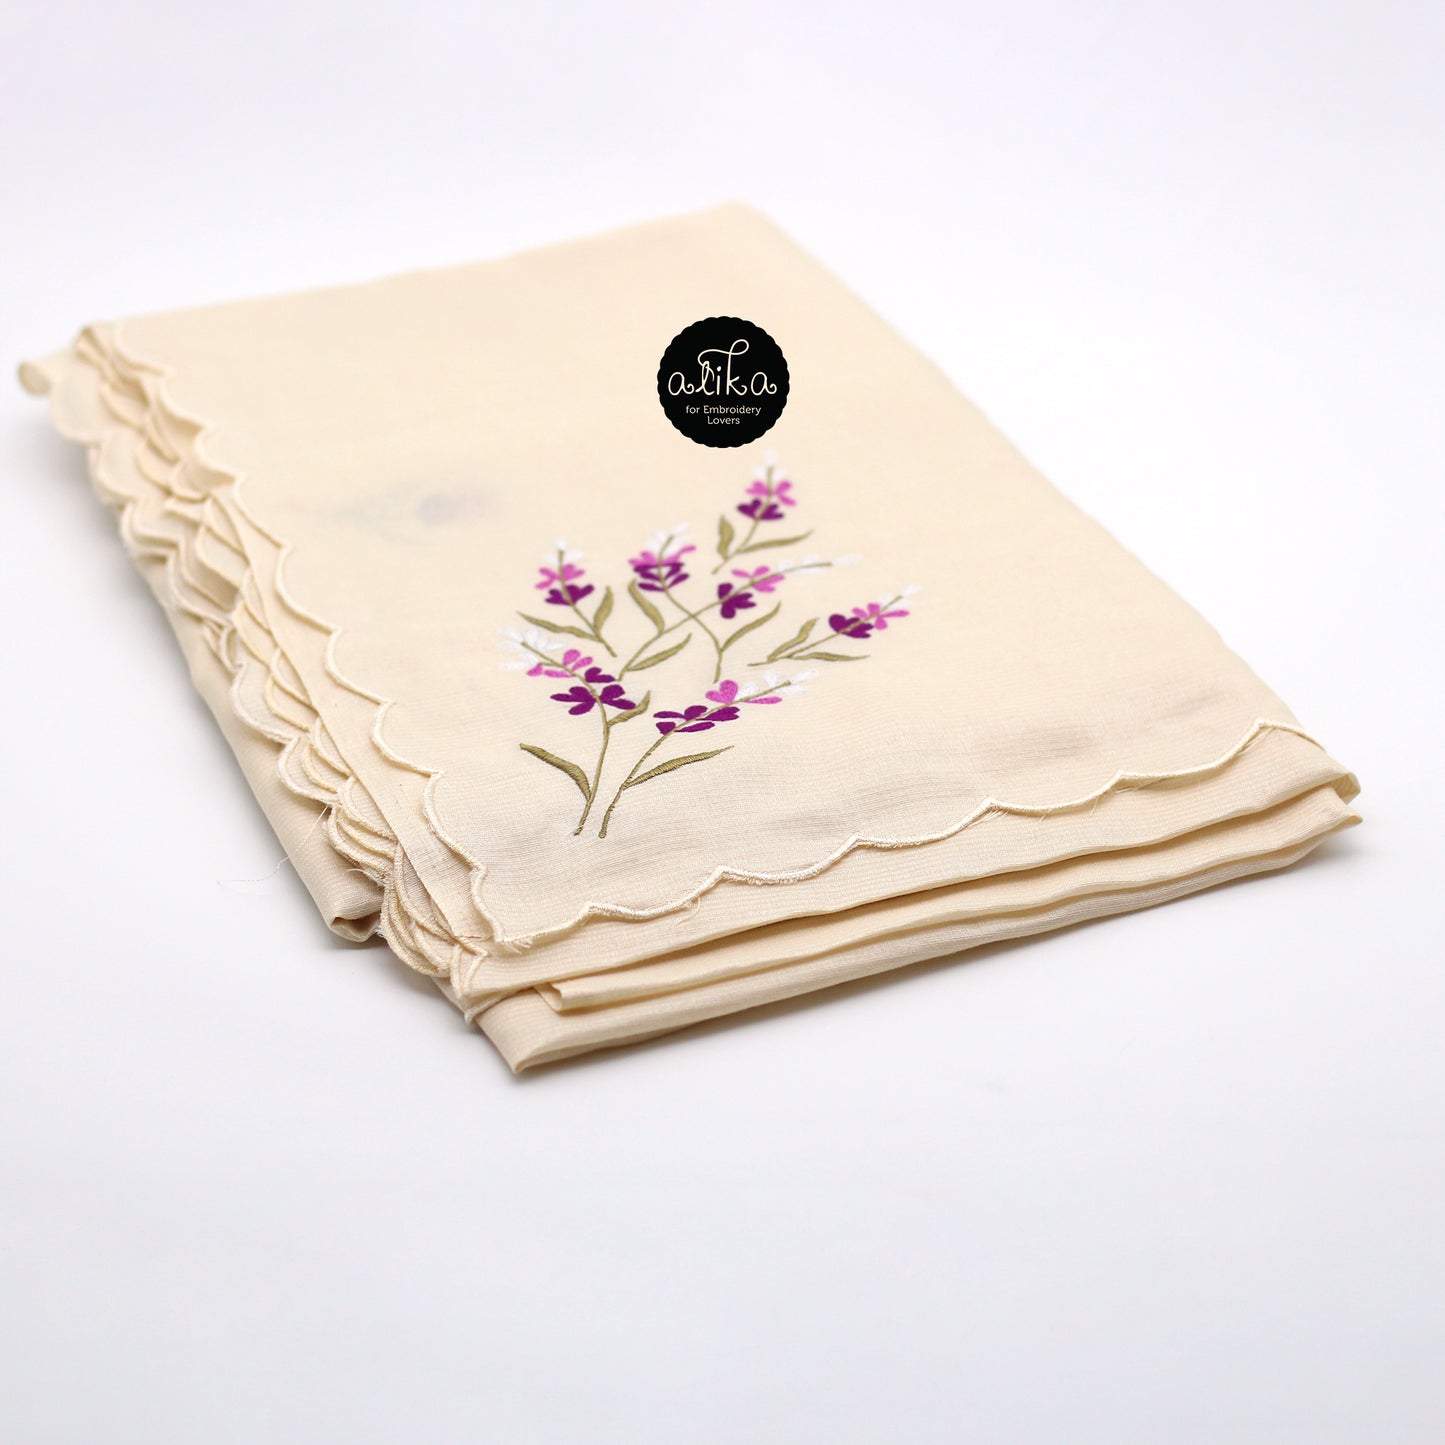 Cream shade striped semi-silk saree with floral bunches in purple shade